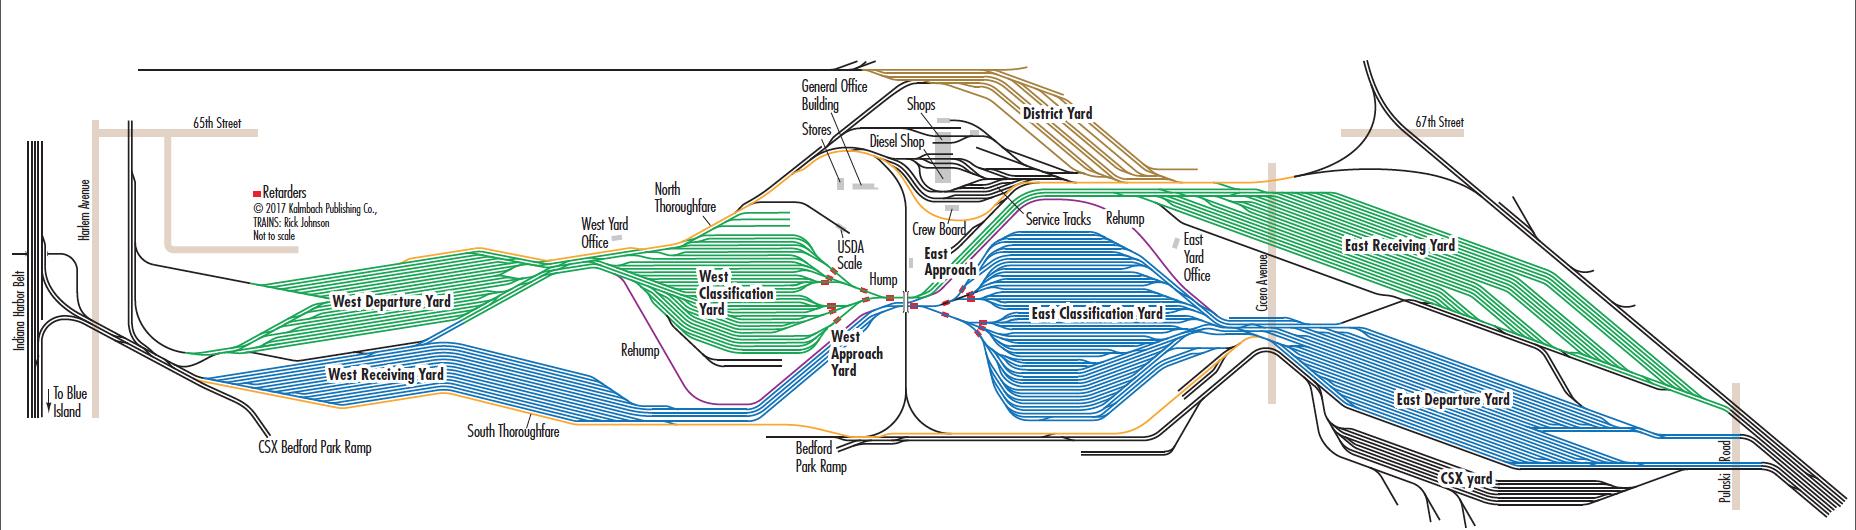 Diagram of hump yard layout.